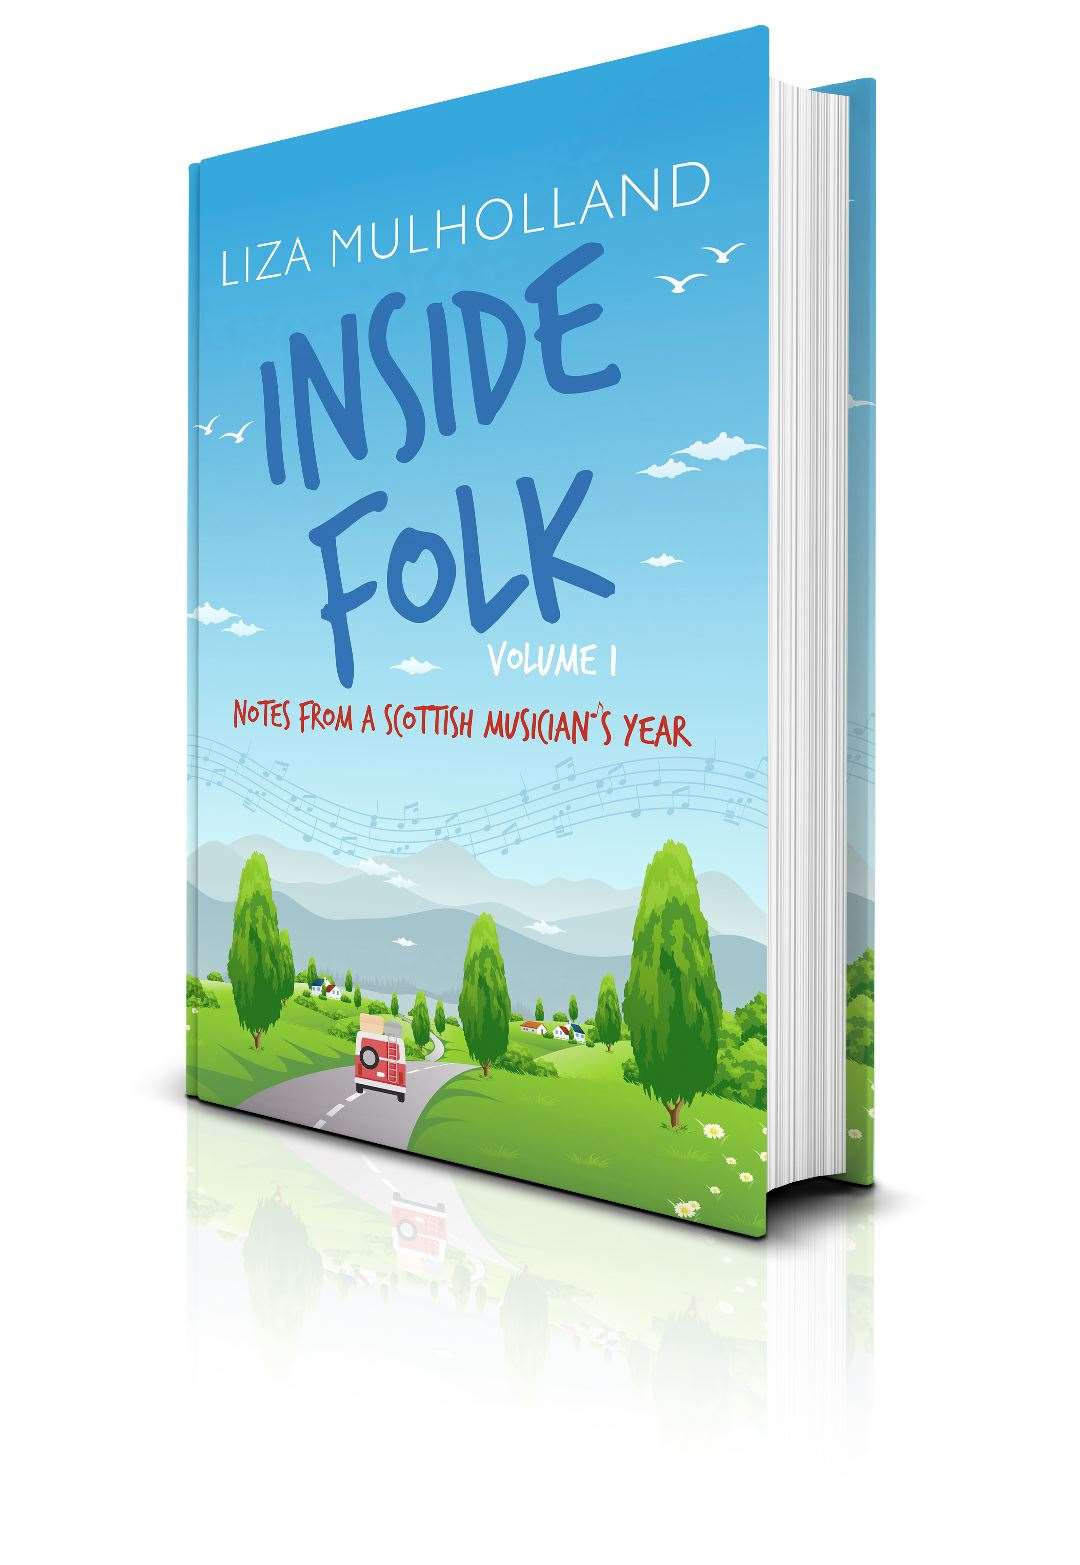 Liza has been reading Inside Folk Volume 1 for the Scottish Women's Institute.